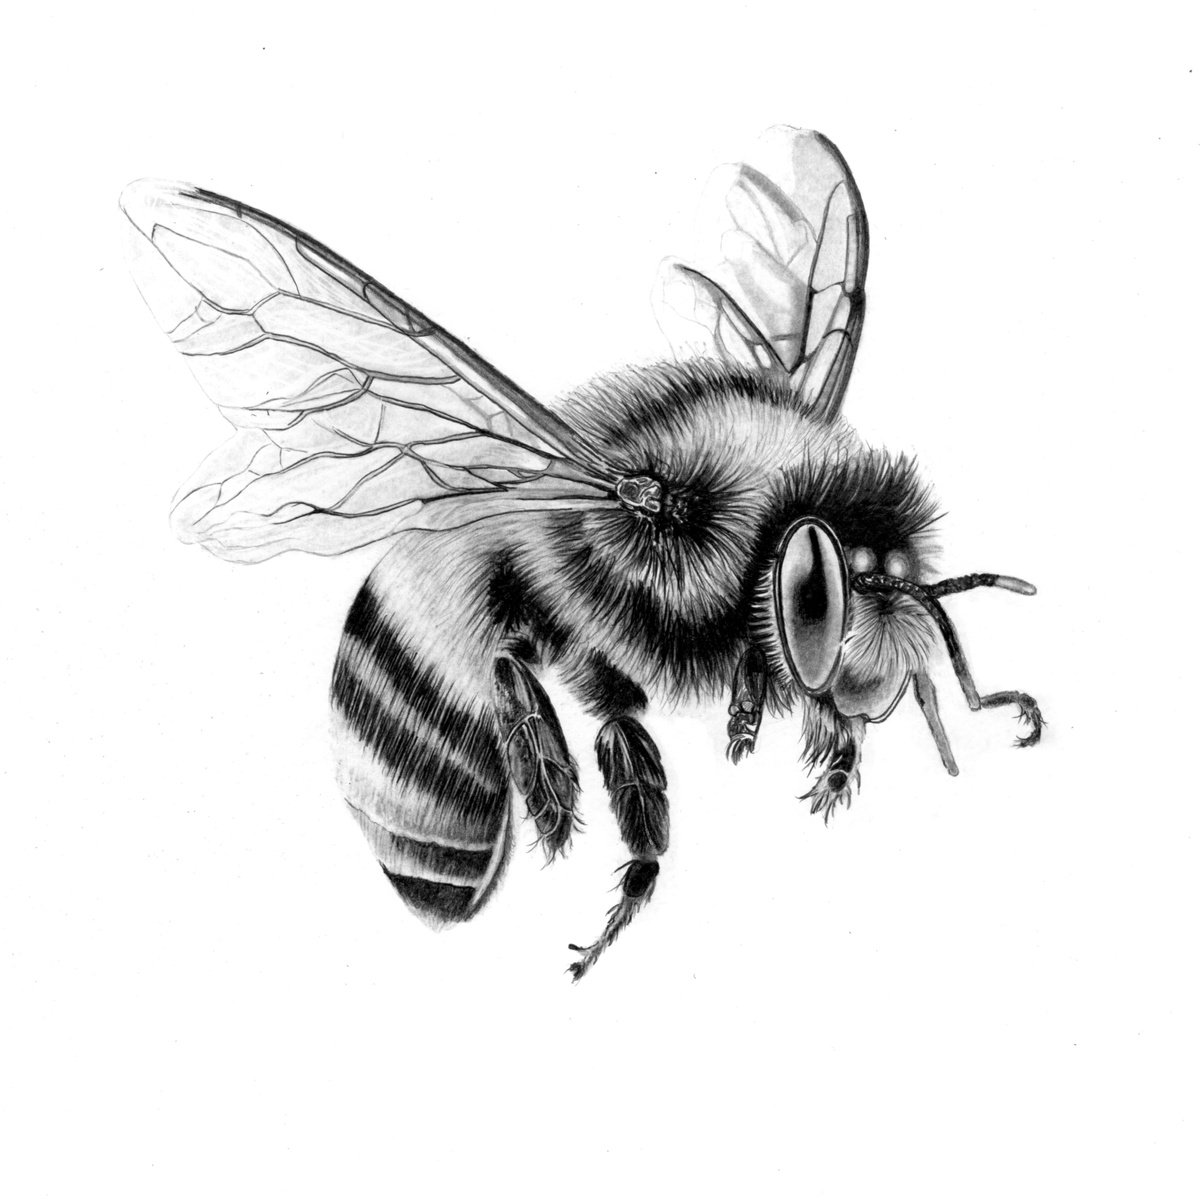 Bee in Pencil #2 by Paul Stowe